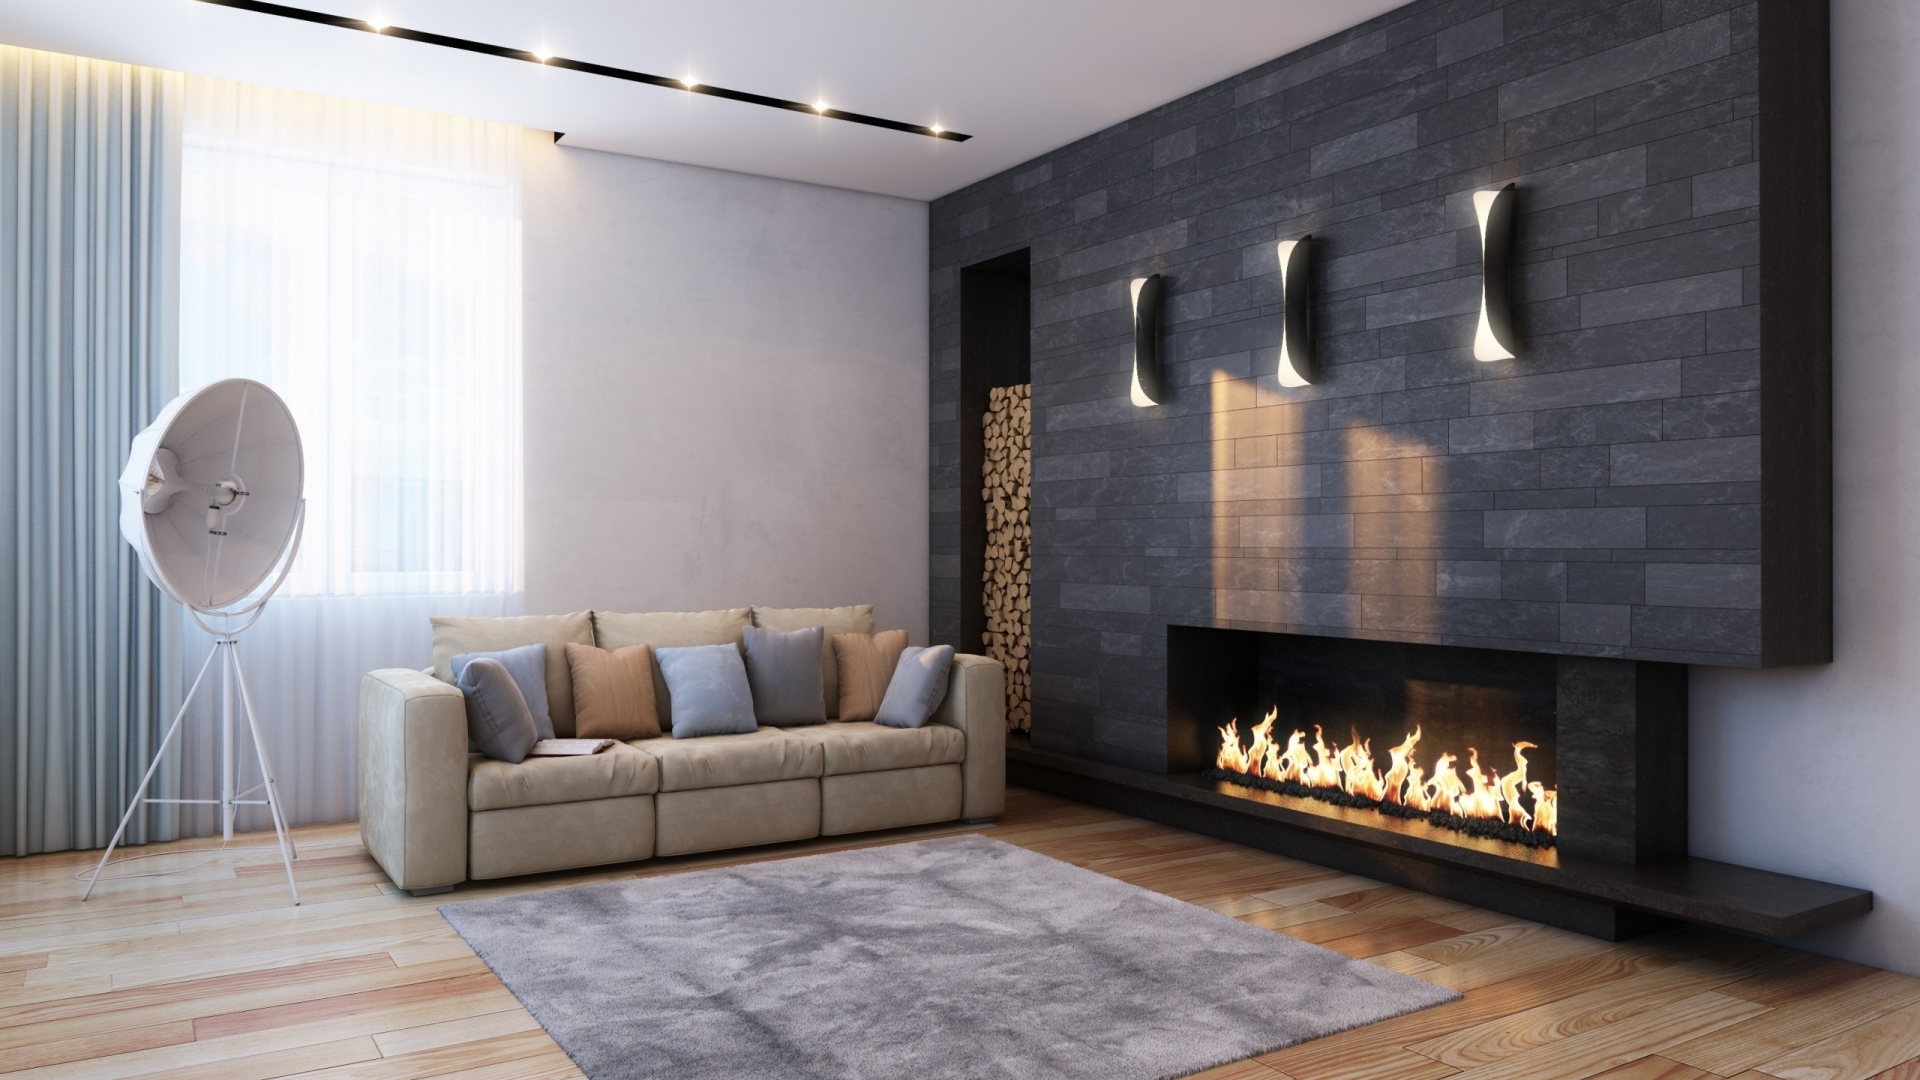 Living Room Fireplace 1920 X 1080